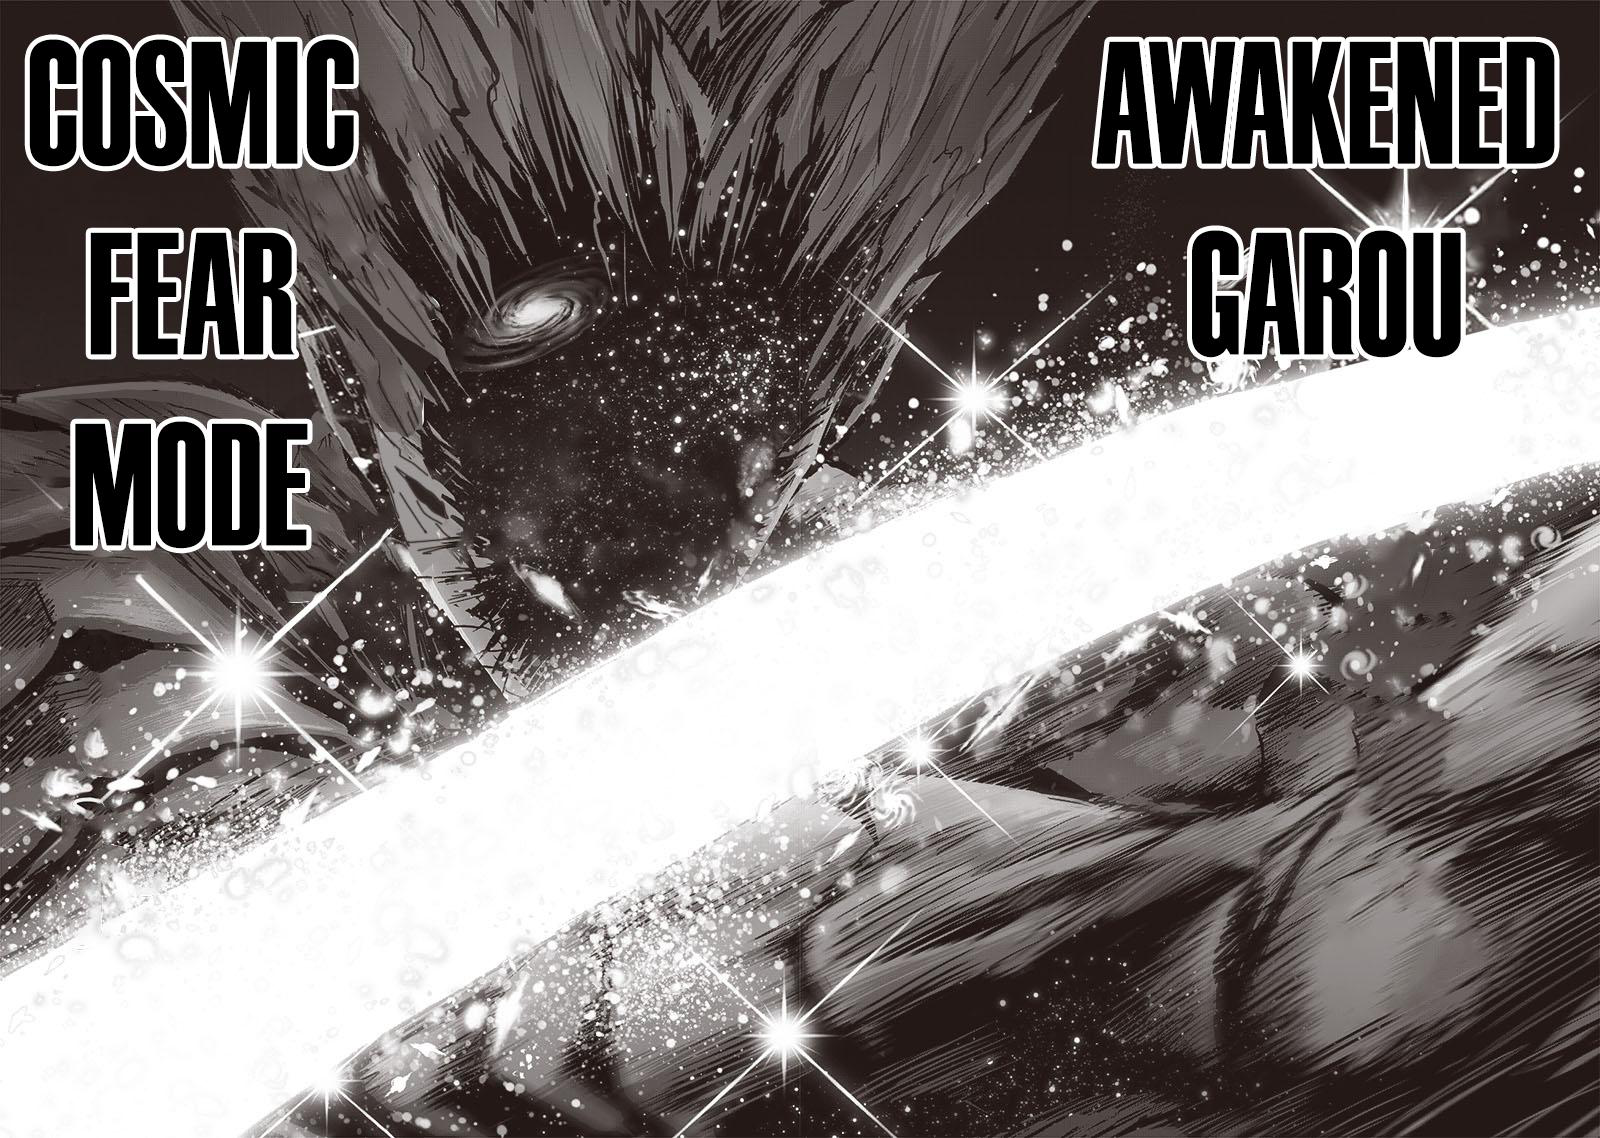 My reason why I think Awakened Garou Cosmic Fear mode is ...